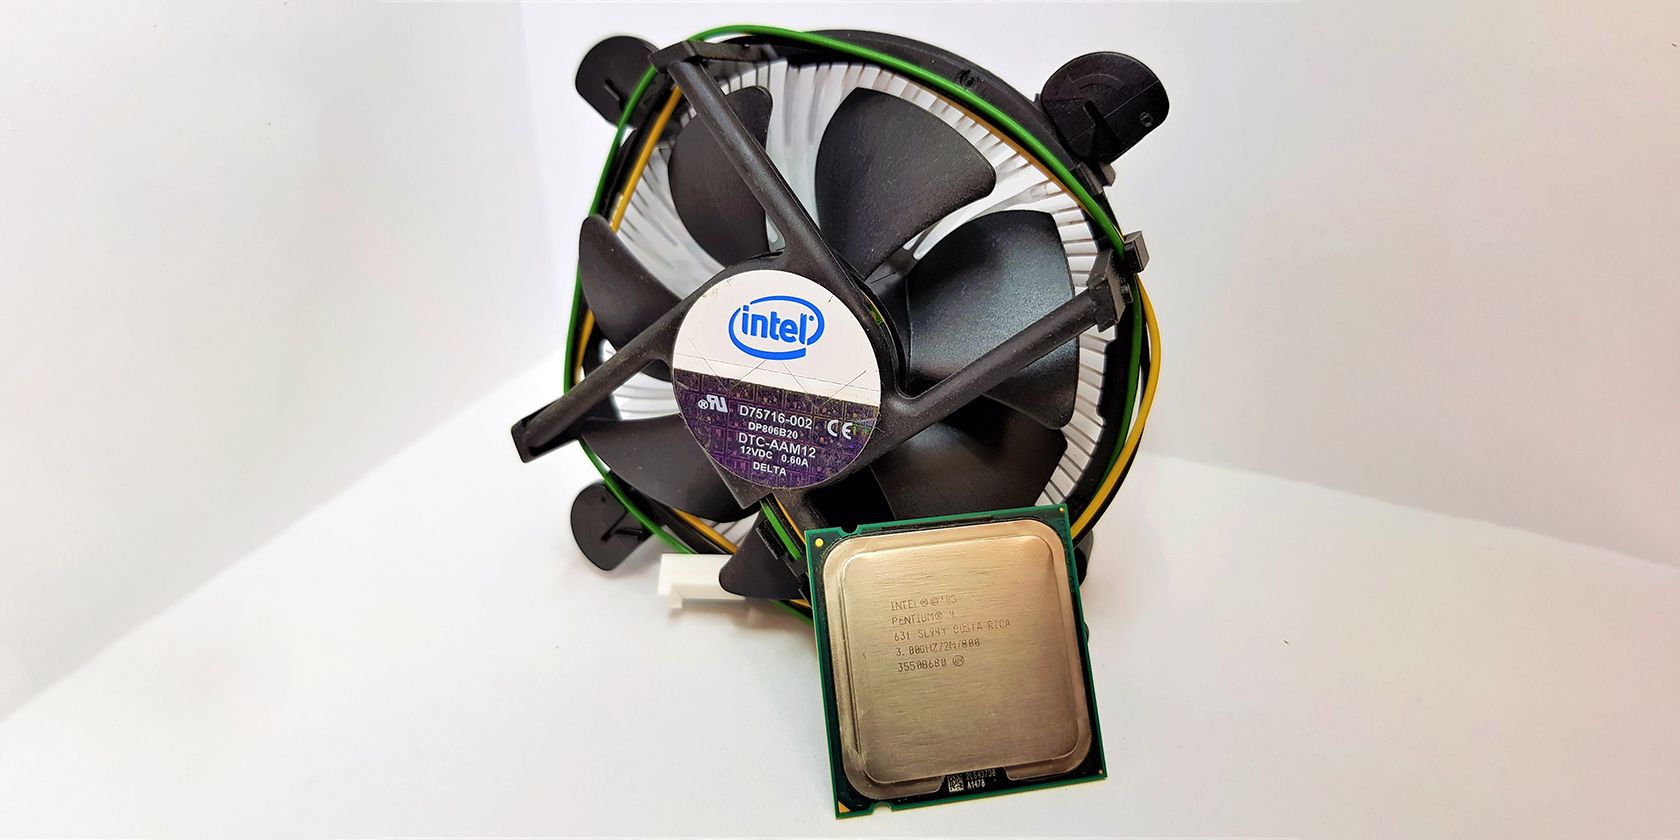 An Intel Pentium 4 Processor With a Fan and Heatsink